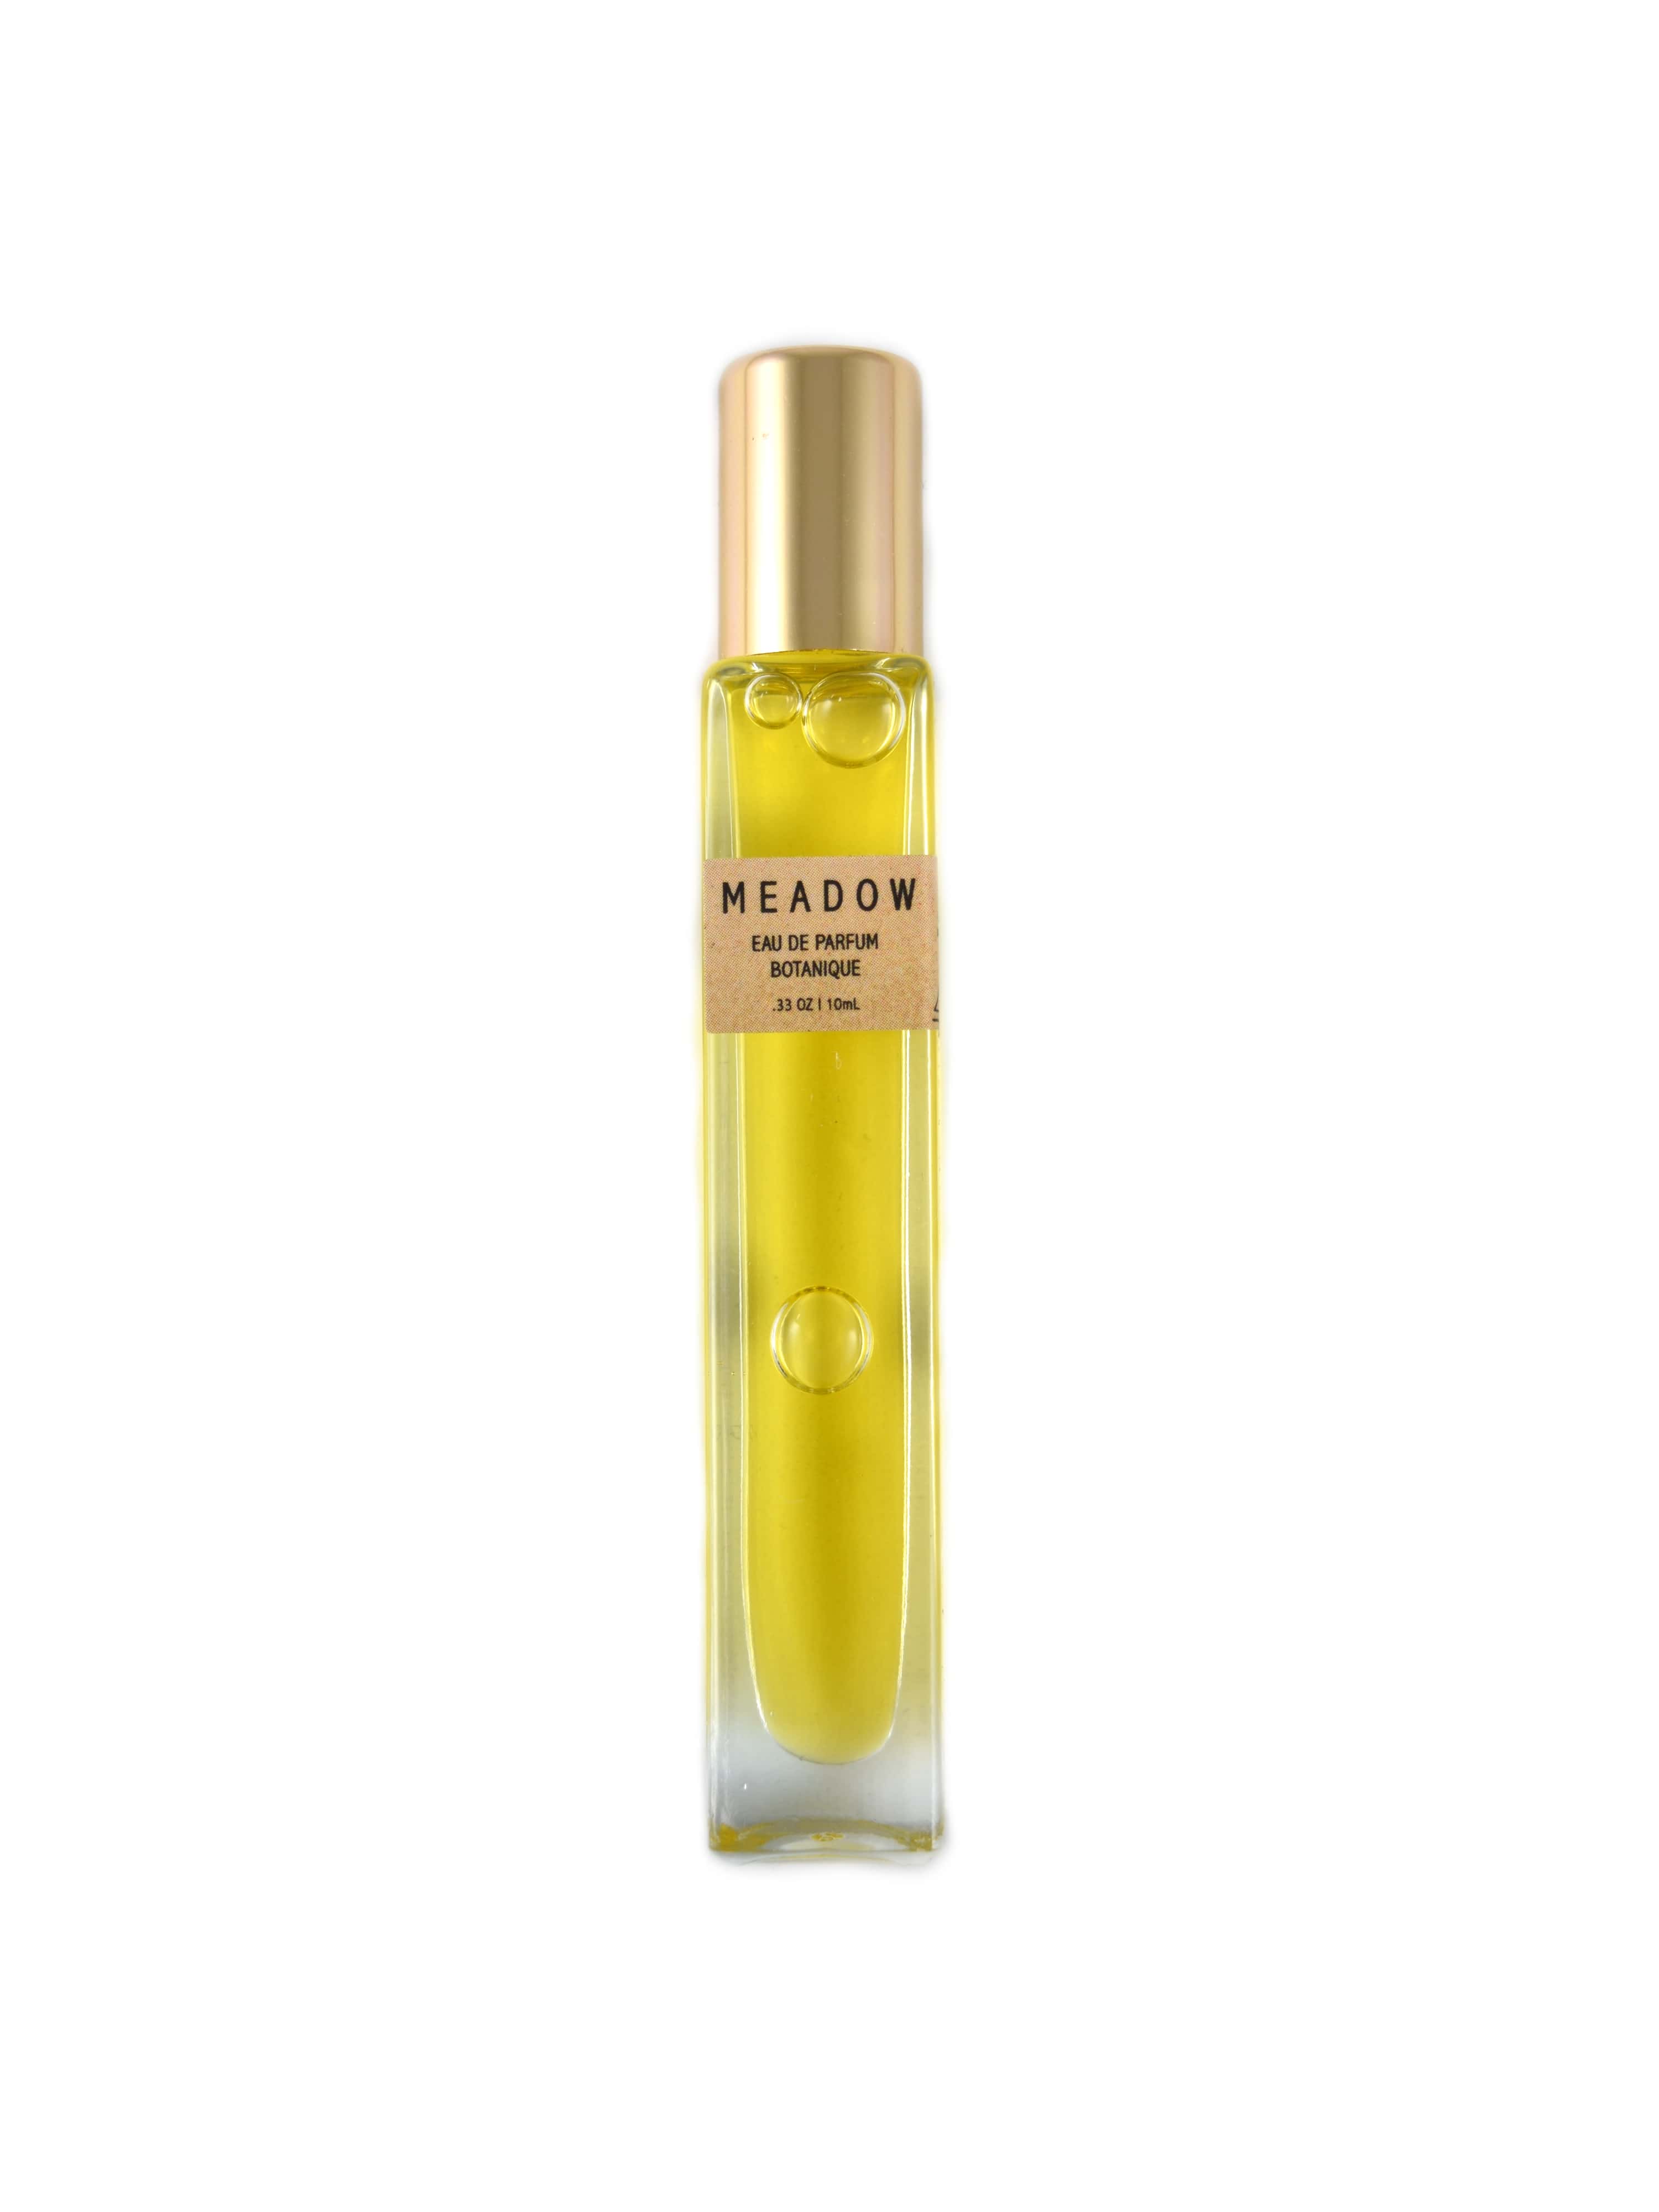 Perfume Roller in Meadow